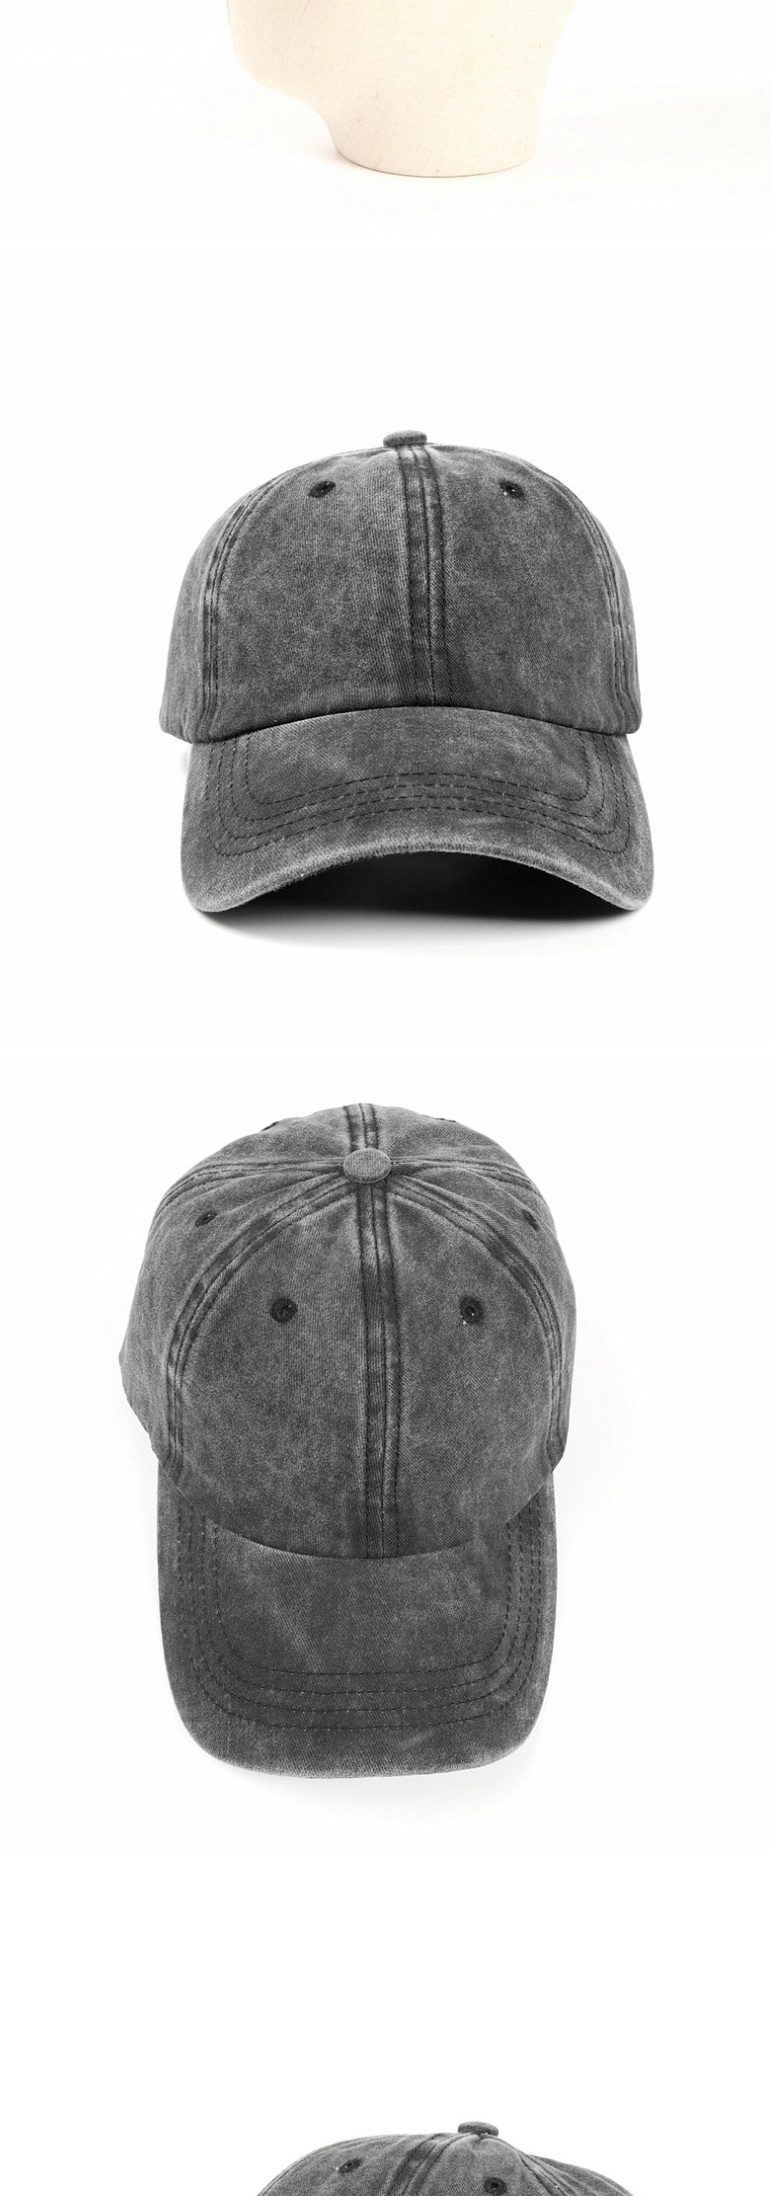 Fashion Black Washed Distressed Denim Soft Top And Curved Brim Cap,Baseball Caps